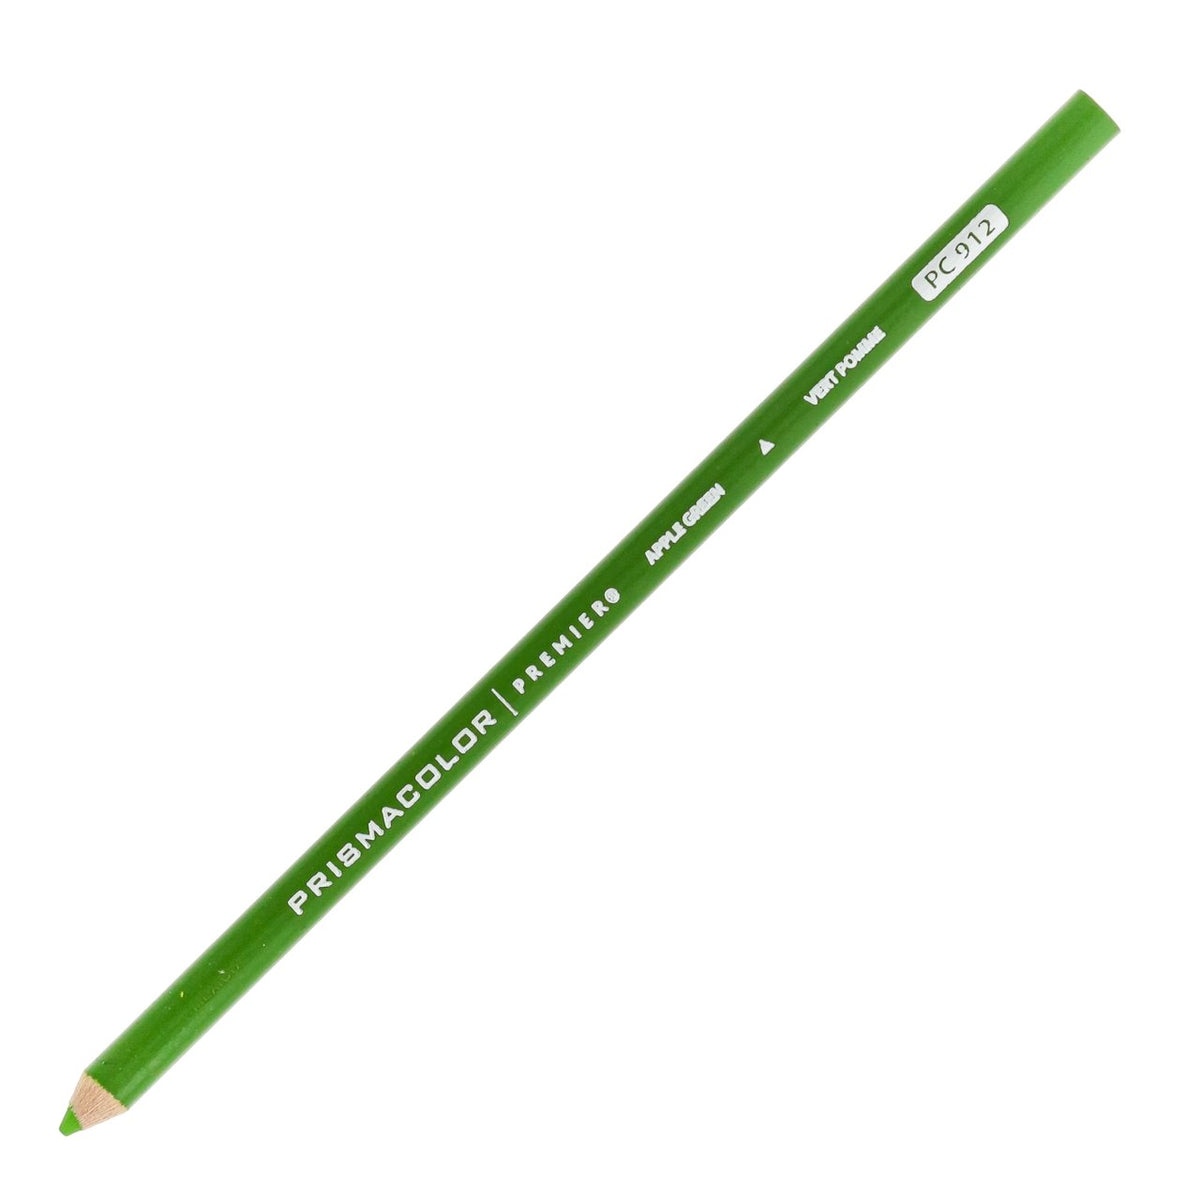 Prismacolor Premier Colored Pencil - Apple Green 912 